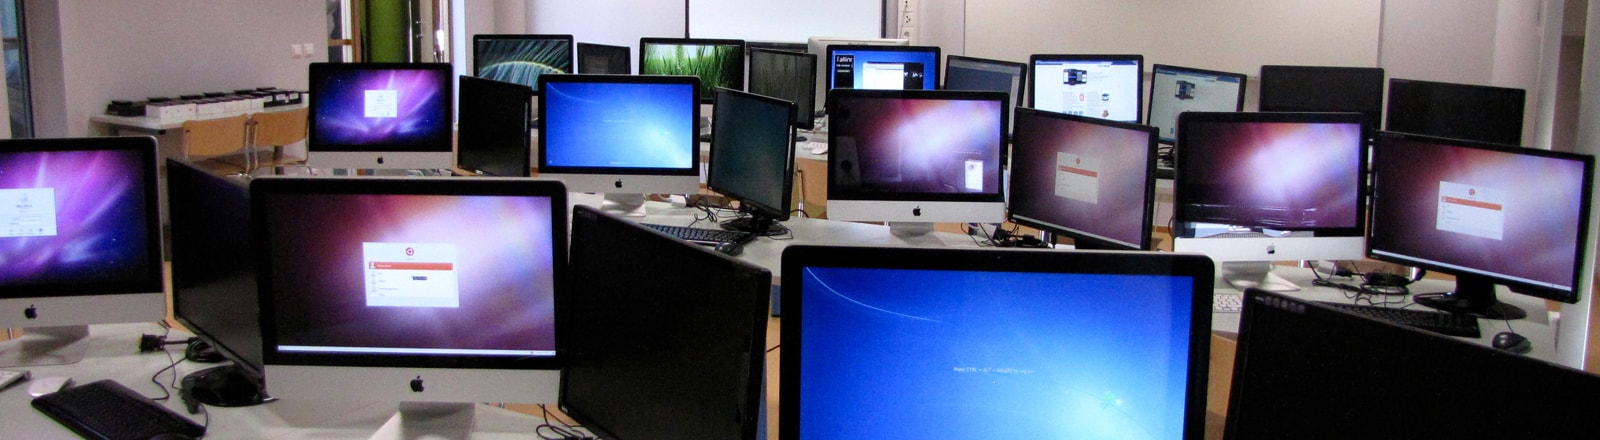 computer lab image